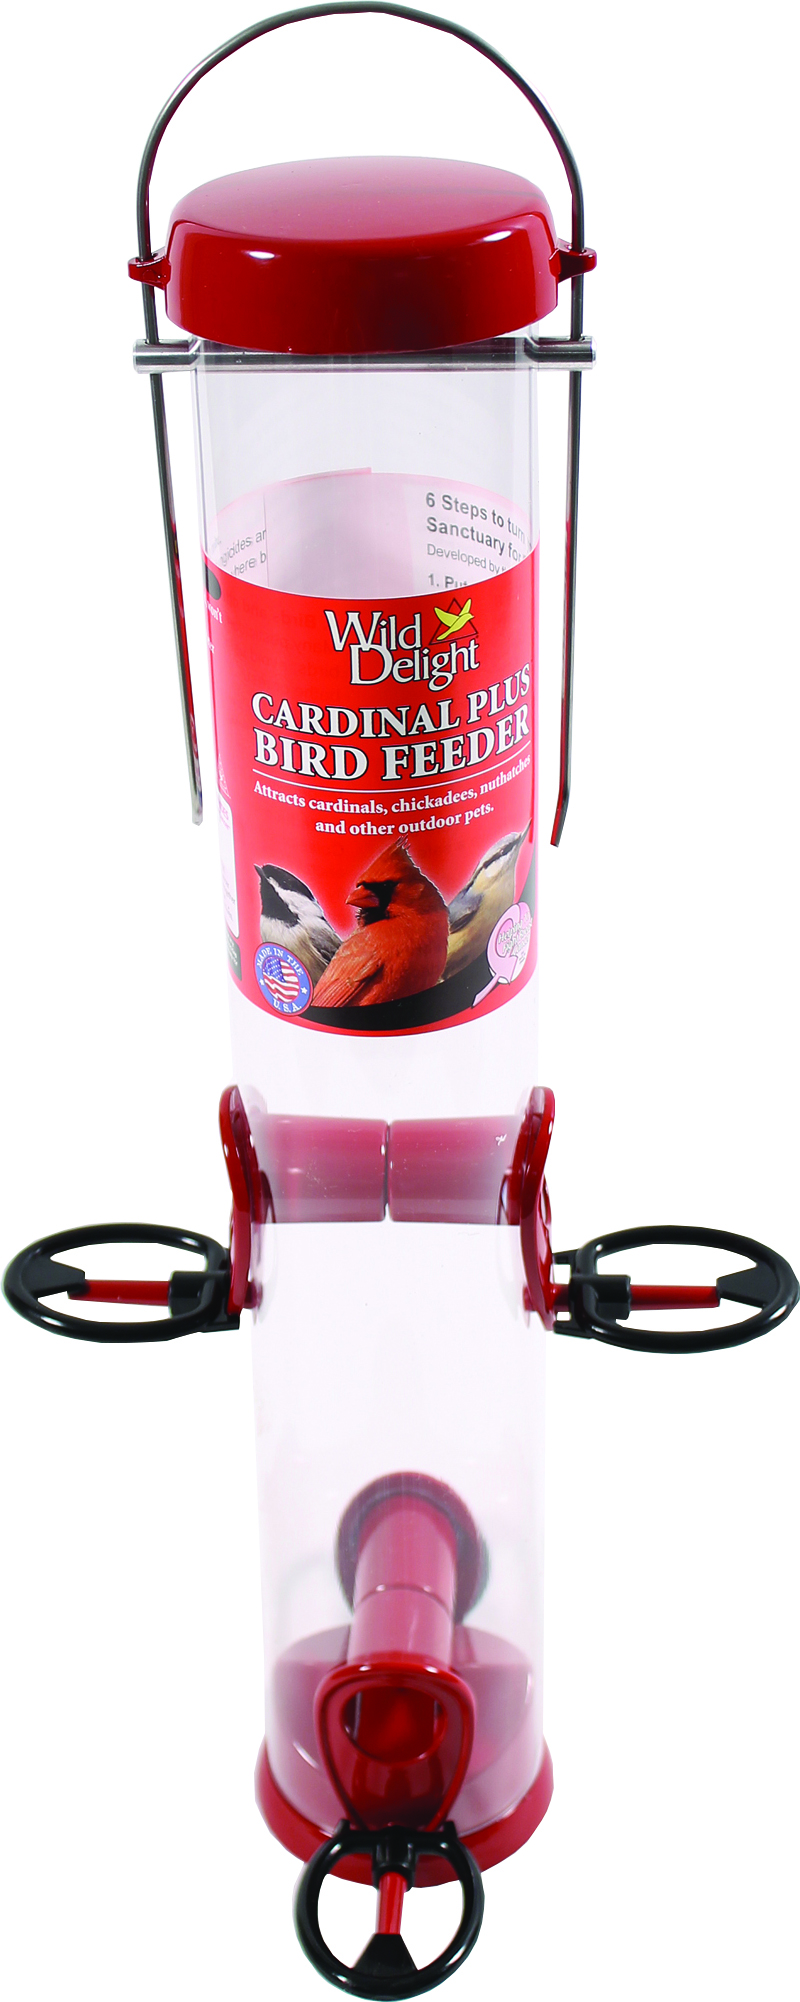 WILD DELIGHT CARDINAL PLUS BIRD FEEDER